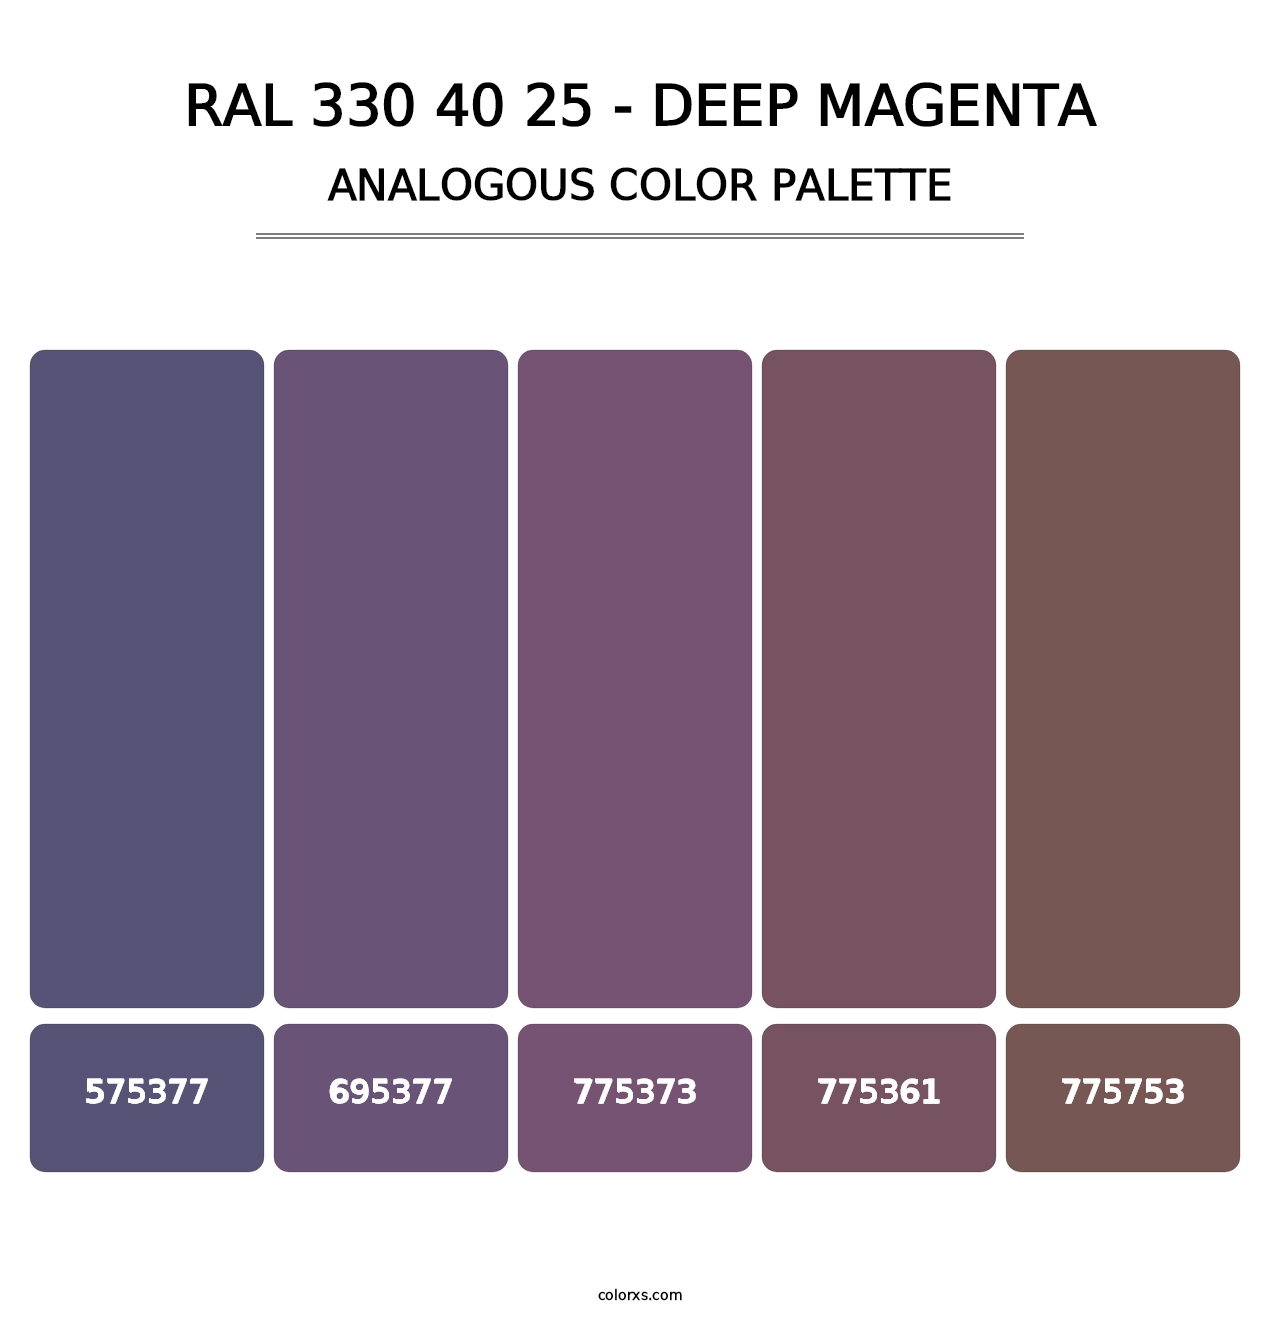 RAL 330 40 25 - Deep Magenta - Analogous Color Palette